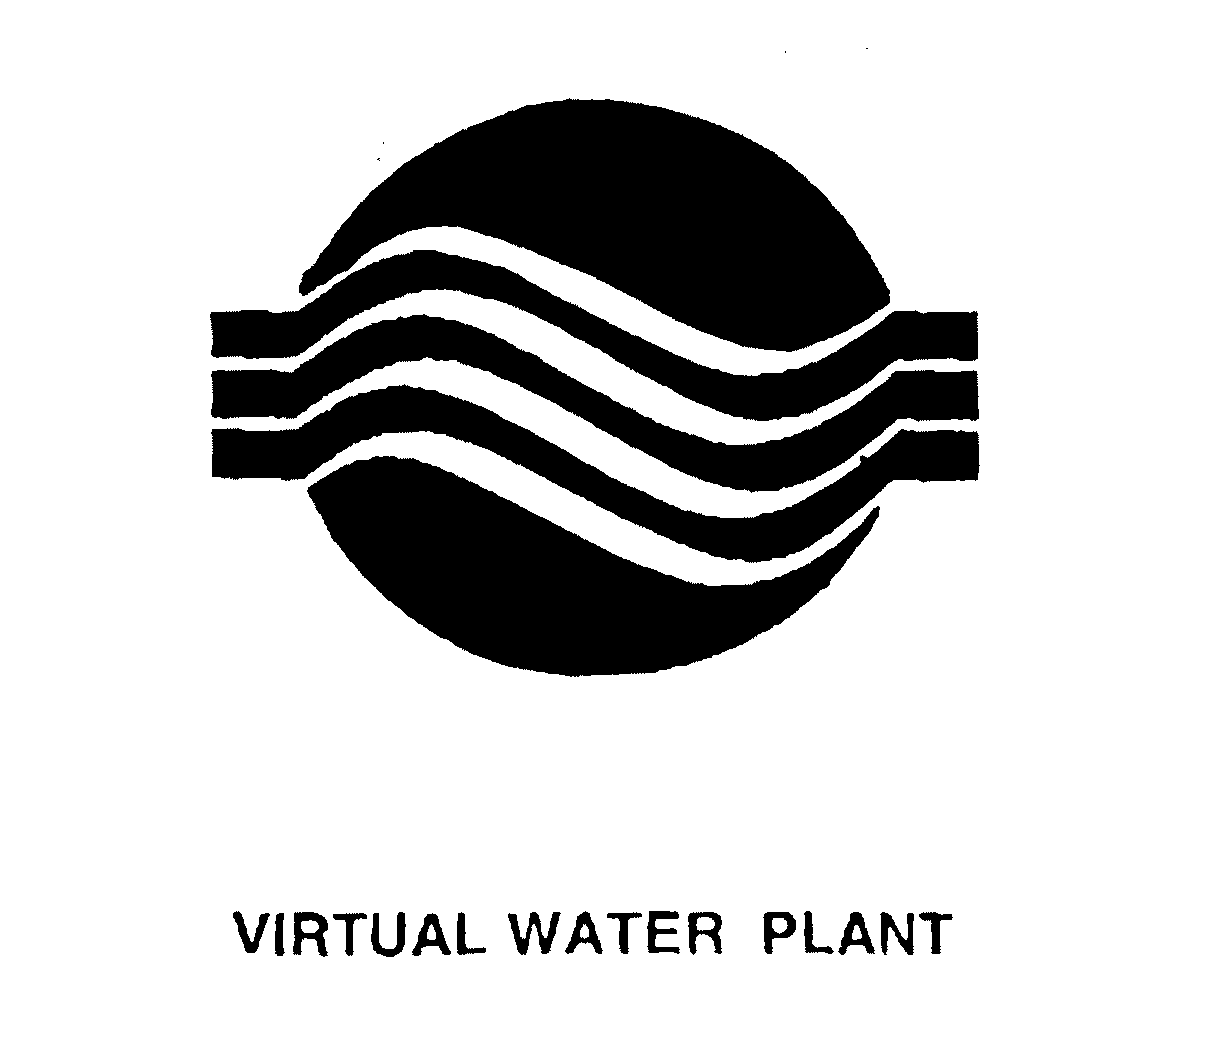  VIRTUAL WATER PLANT